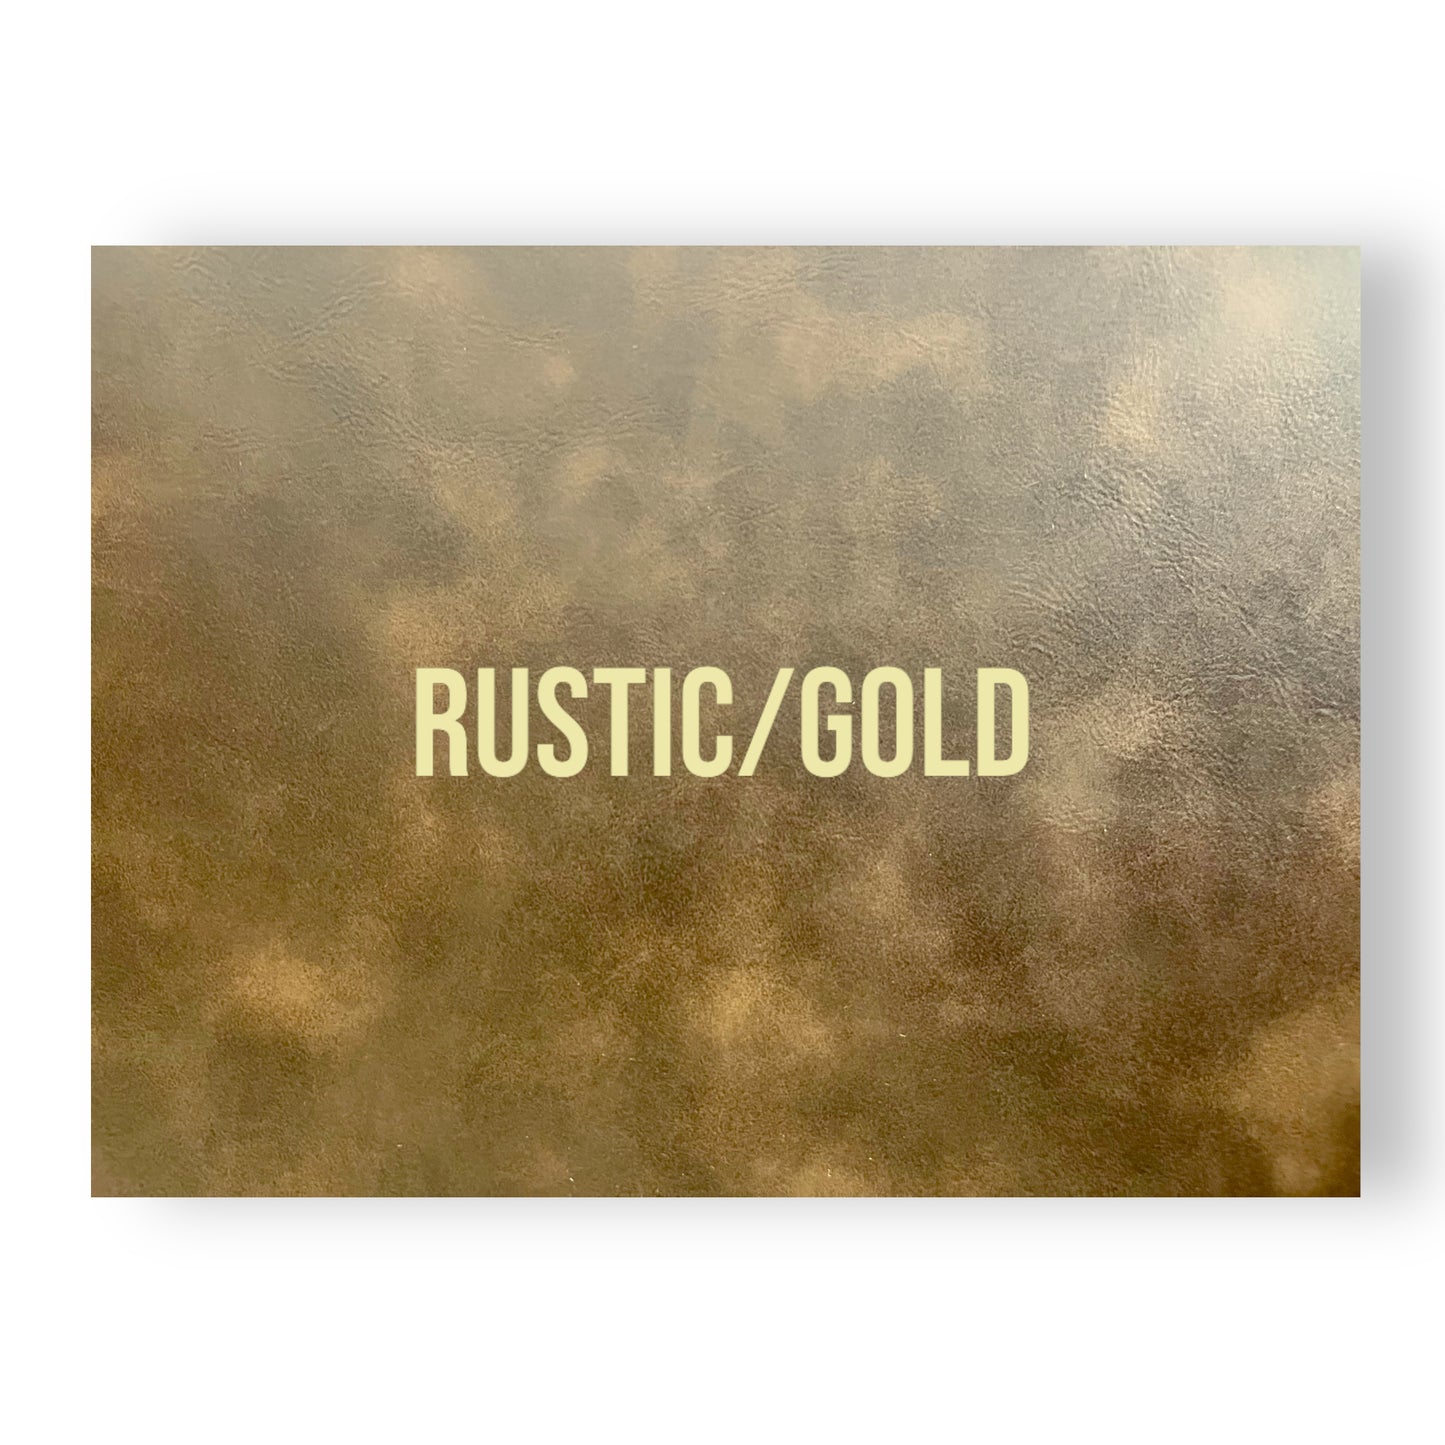 RUSTIC/GOLD HYDBOND’D LEATHERETTE SHEET